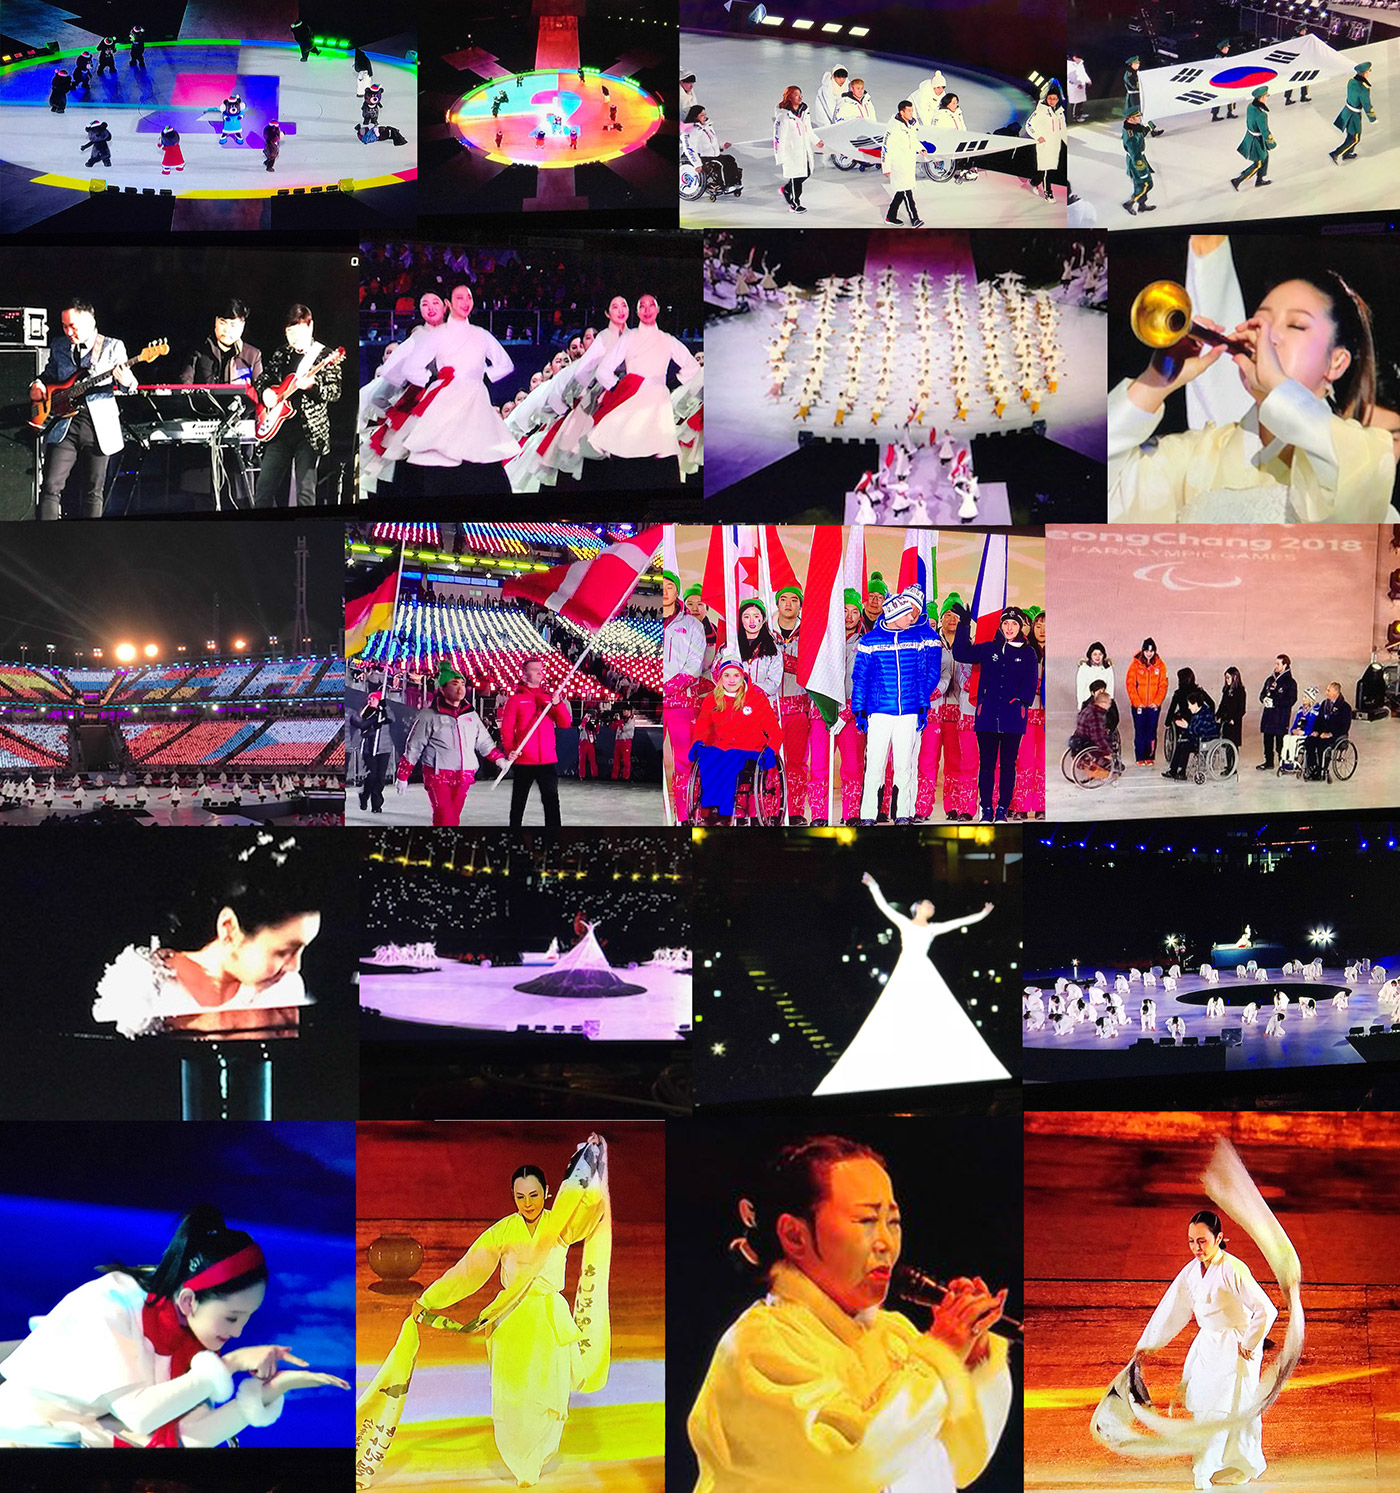 PyeongChang Paralympics 2018 Photo Montage 10 - Closing Ceremony